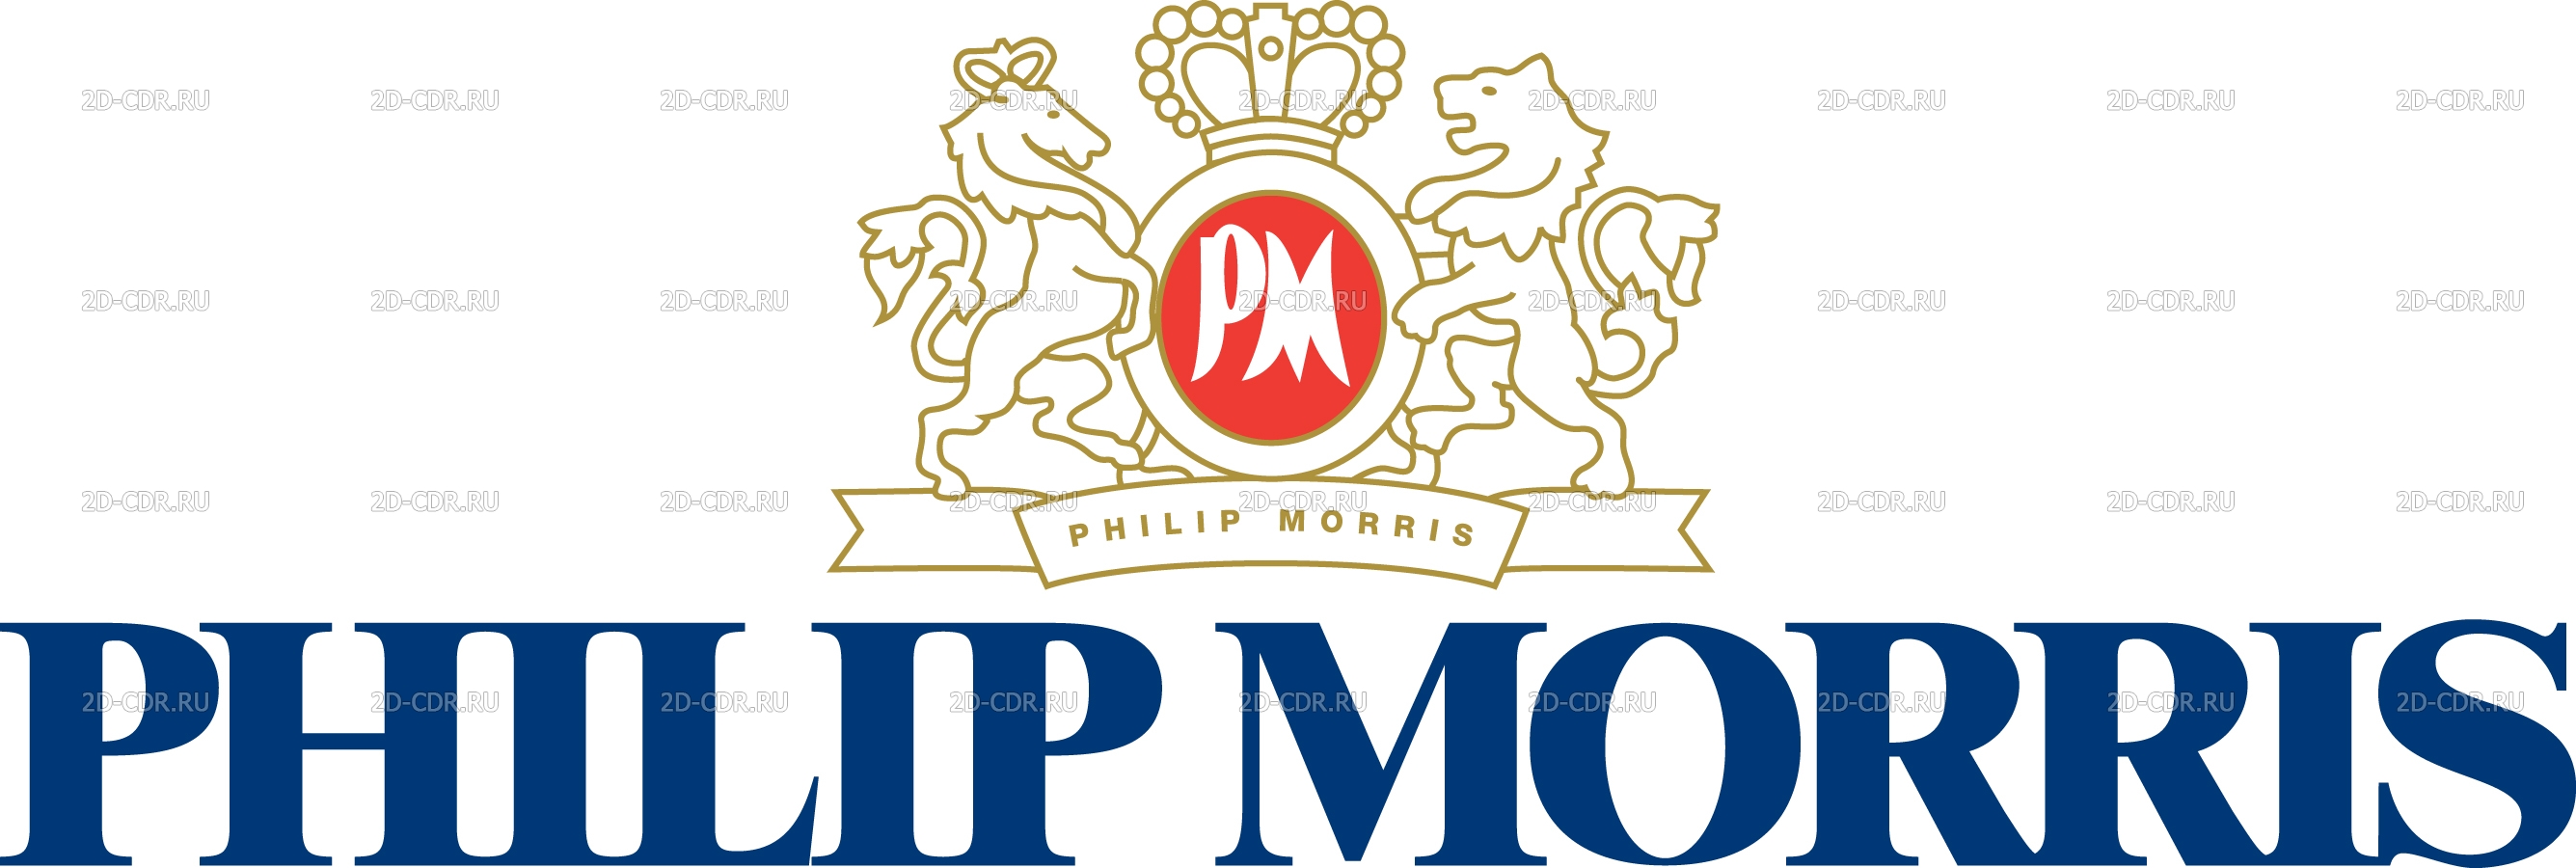 Сайт филип моррис. Эмблема Филлип Моррис. Филип Моррис Интернэшнл лого. Табачная компания Филип Моррис. Логотип компании Philip Morris.